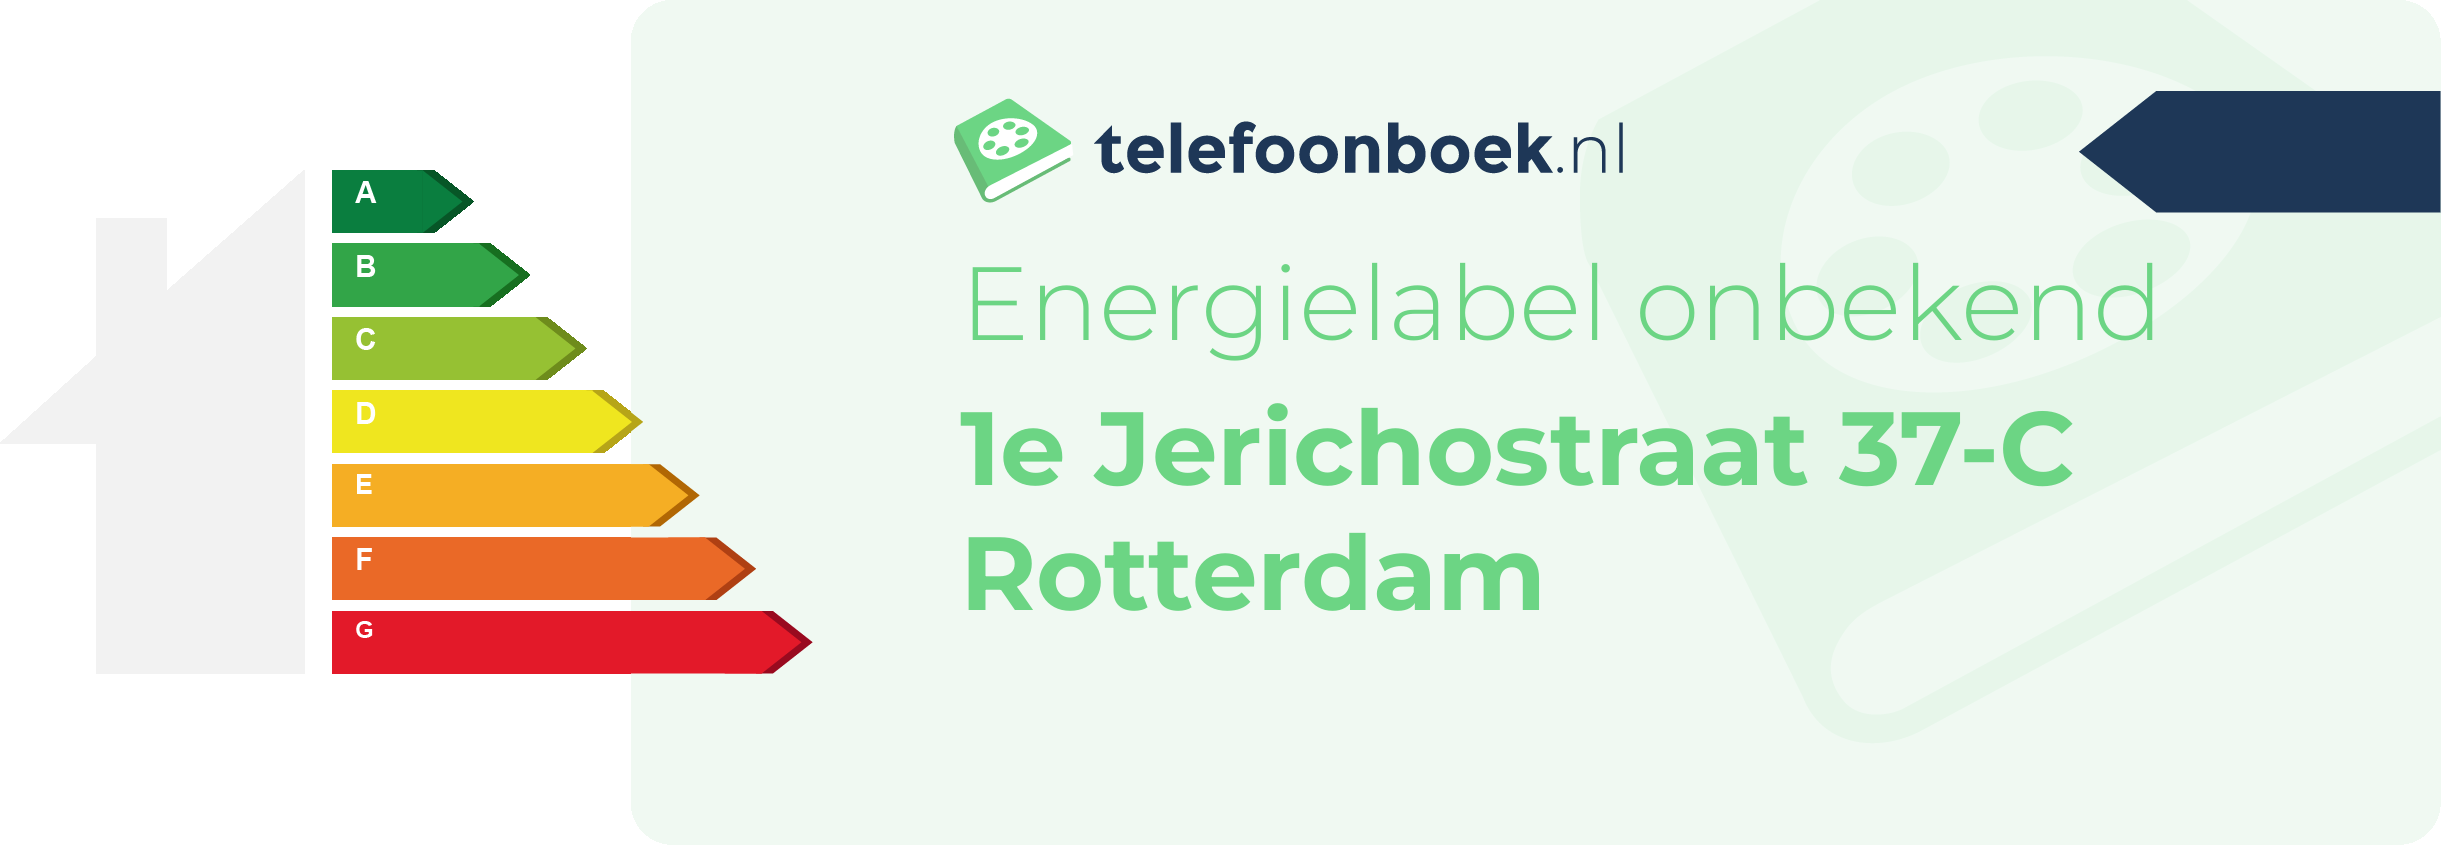 Energielabel 1e Jerichostraat 37-C Rotterdam